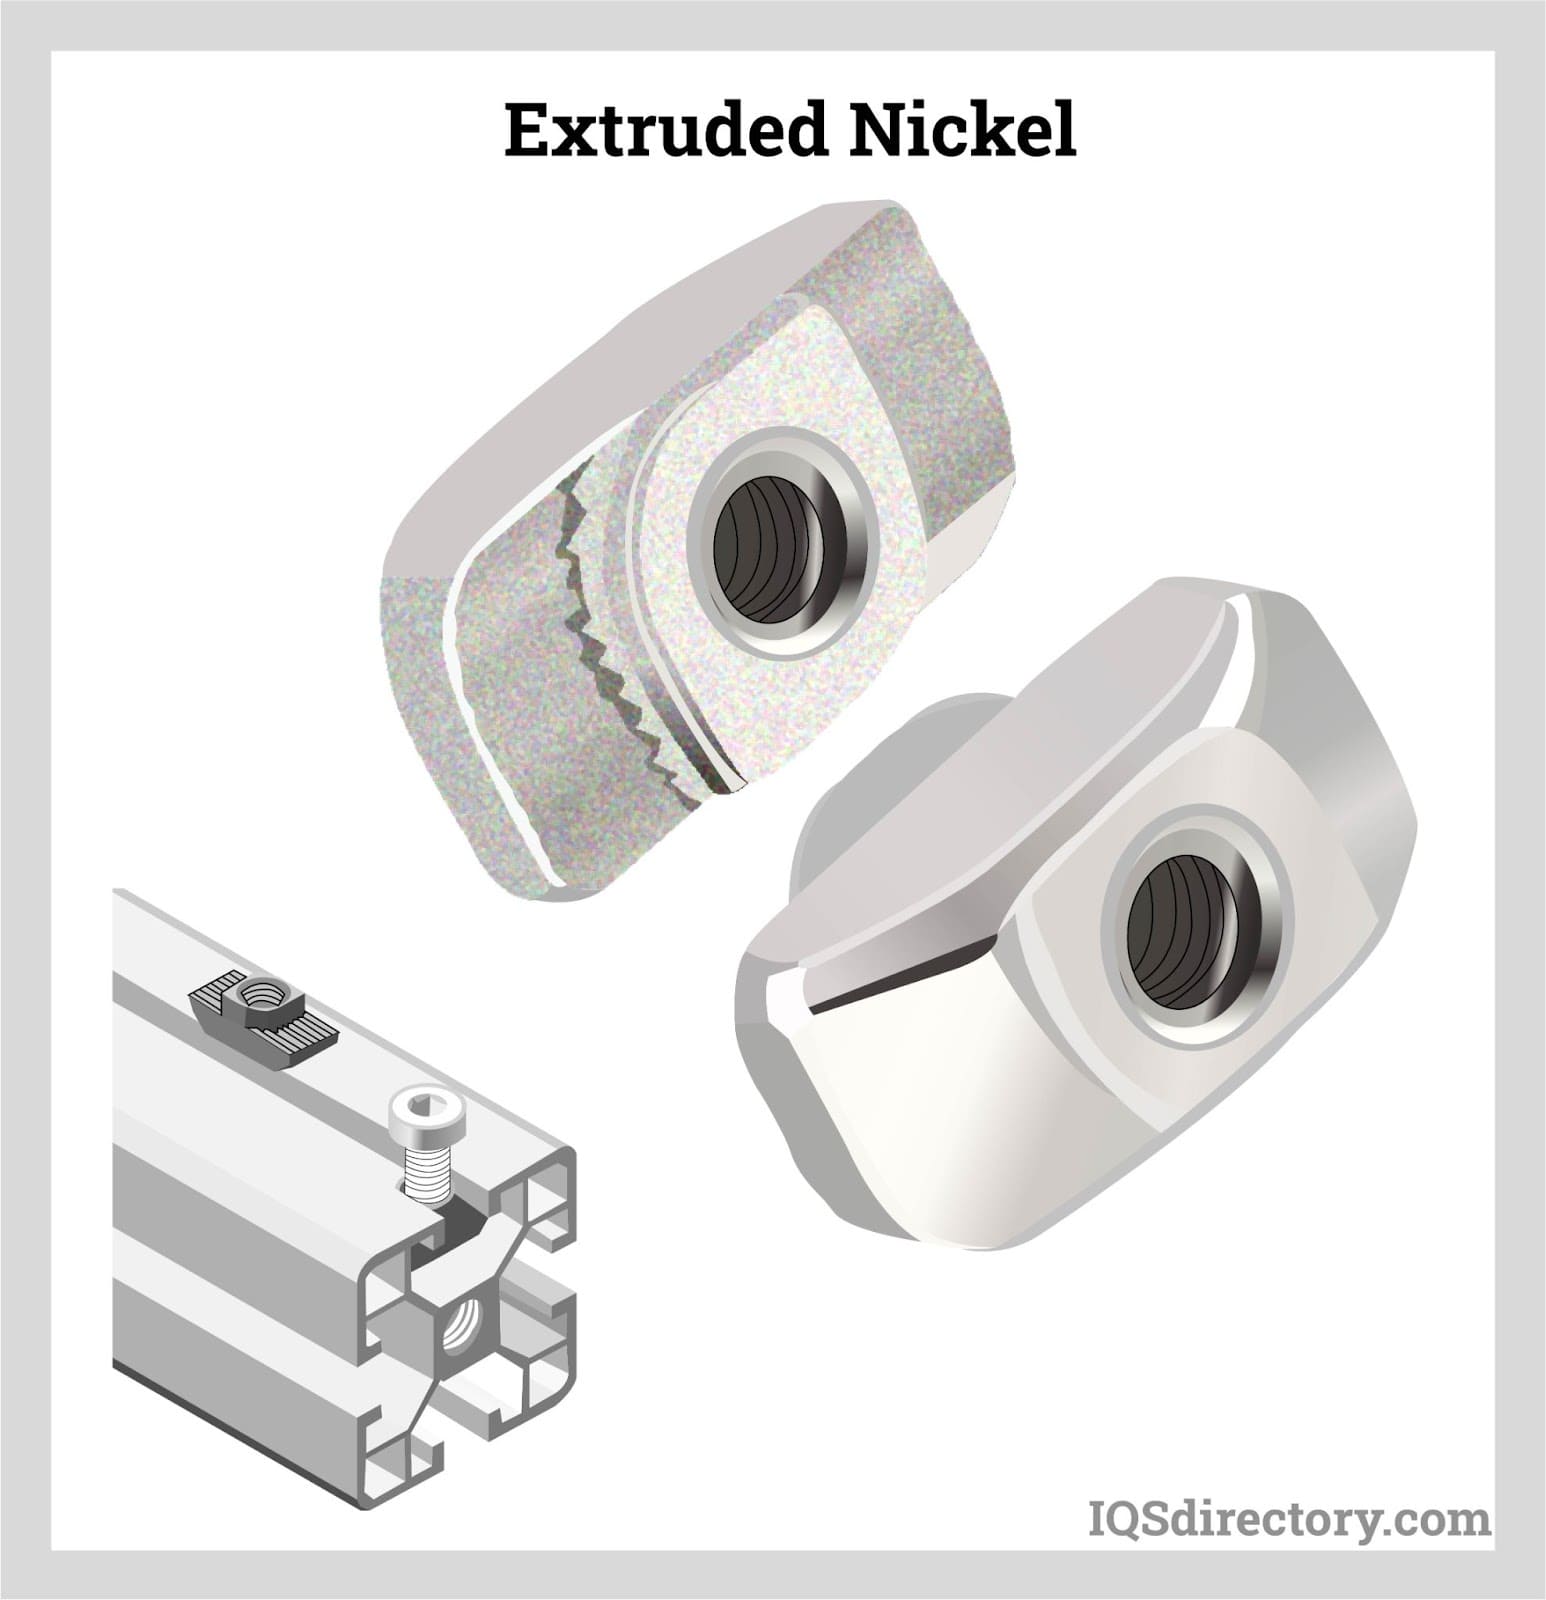 Extruded Nickel